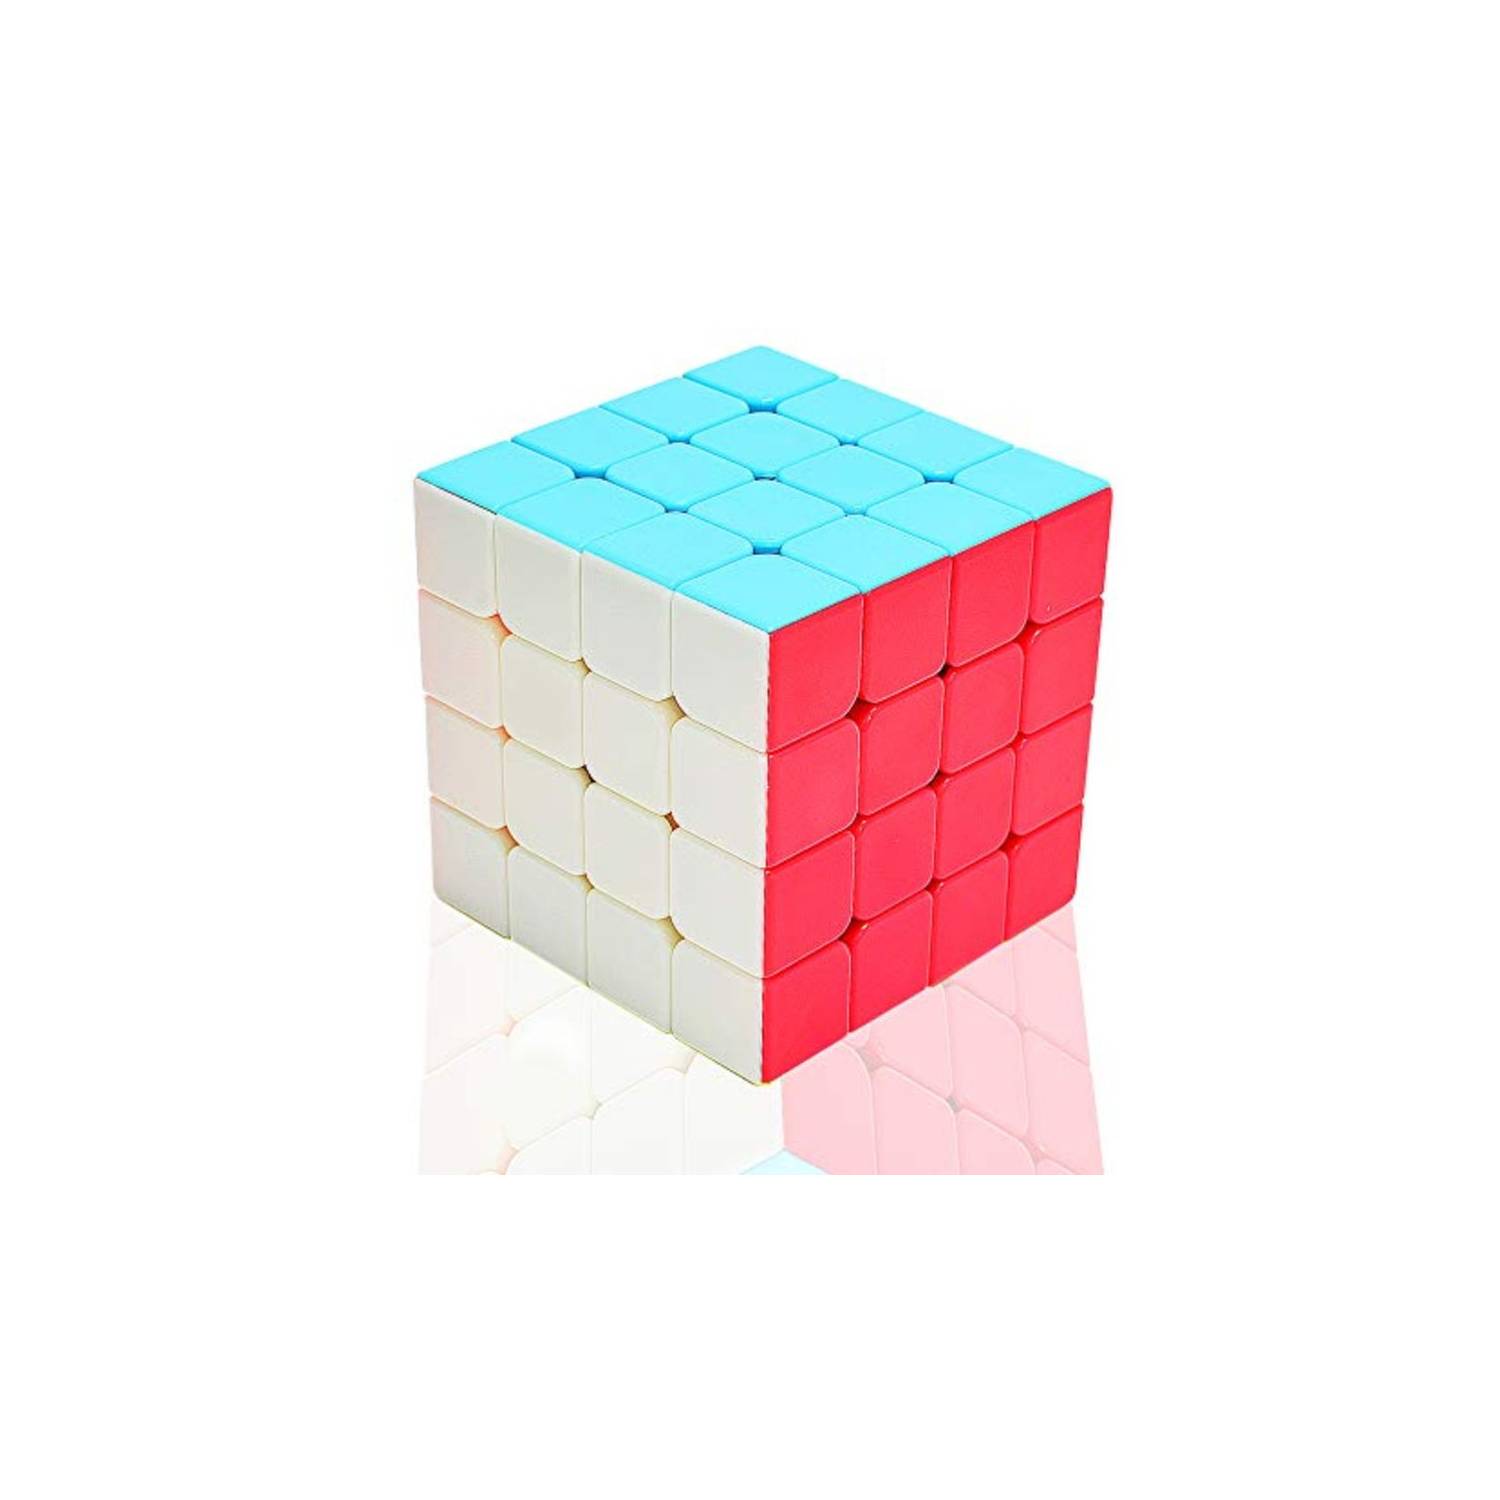 Cubo De Rubik 4x4 Cubo mágico 4x4 cubo rubik 4x4 GENERICO | falabella.com